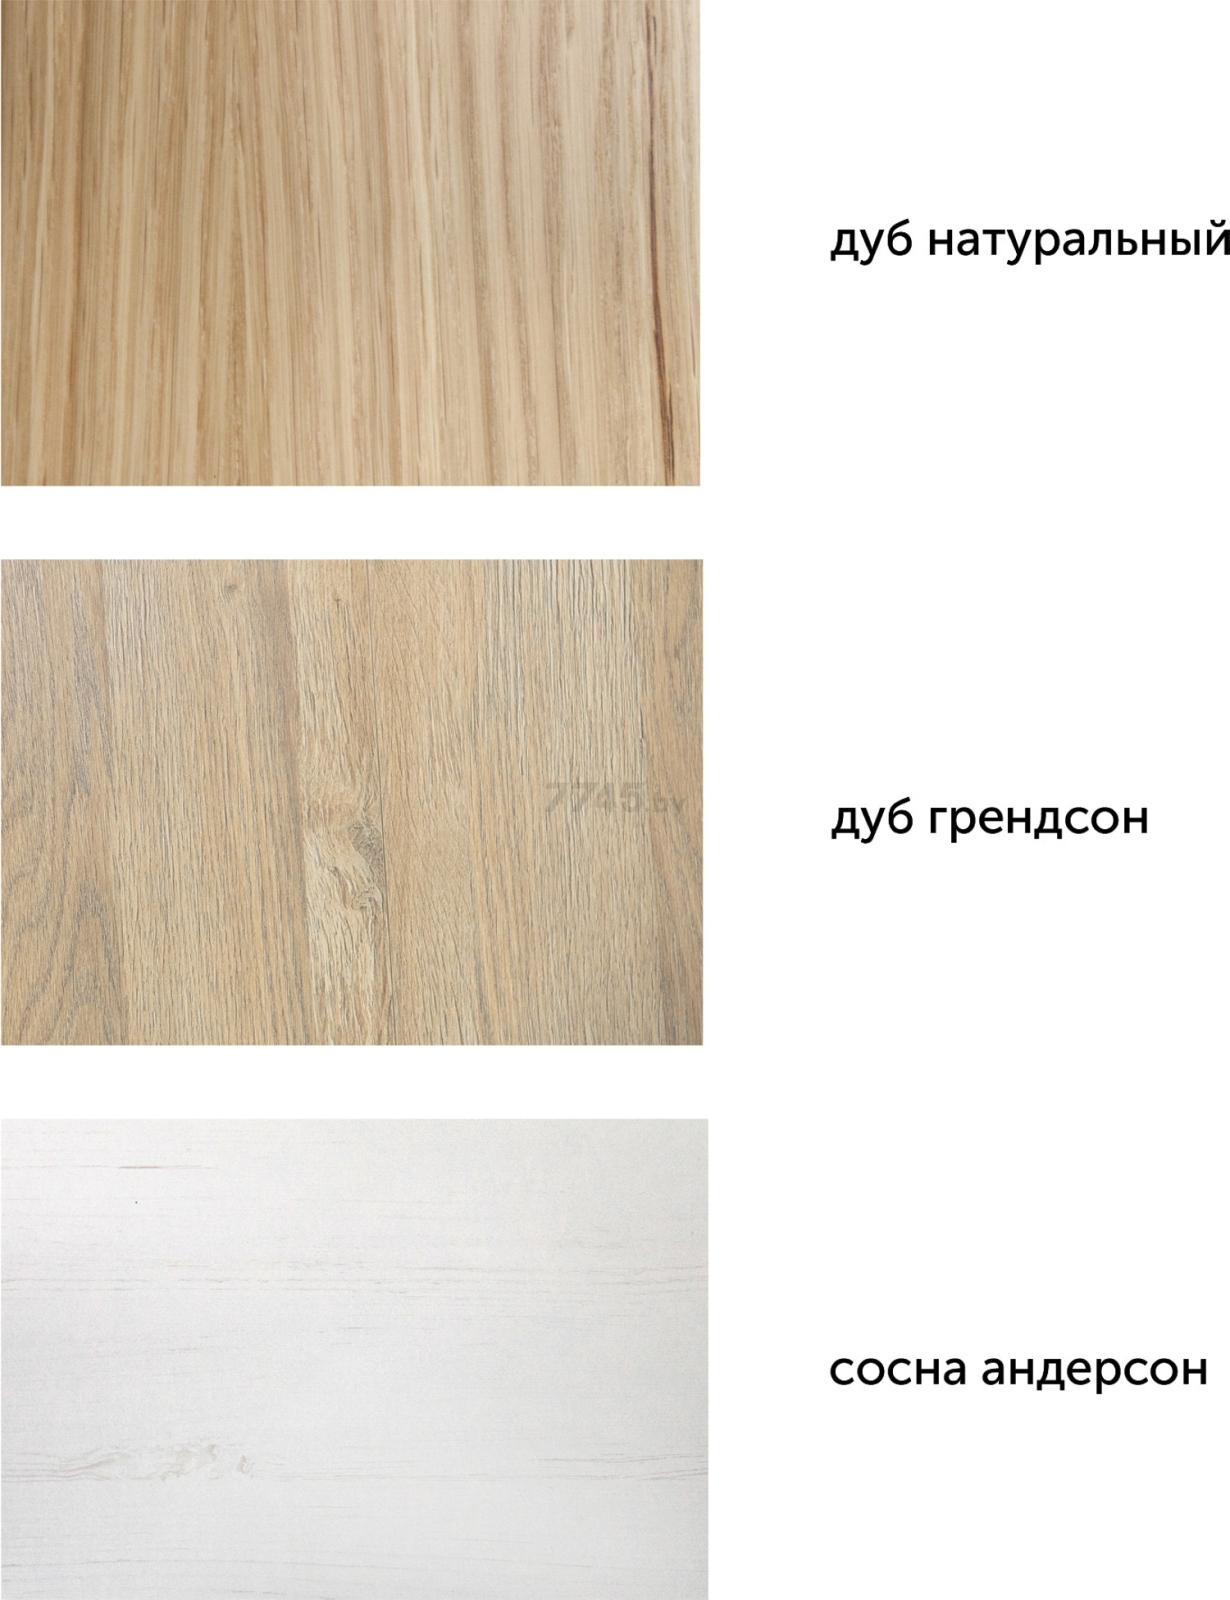 Стол кухонный DREWMIX Max 5 P дуб грендсон/черный 120-150x80x78 см (69883) - Фото 3